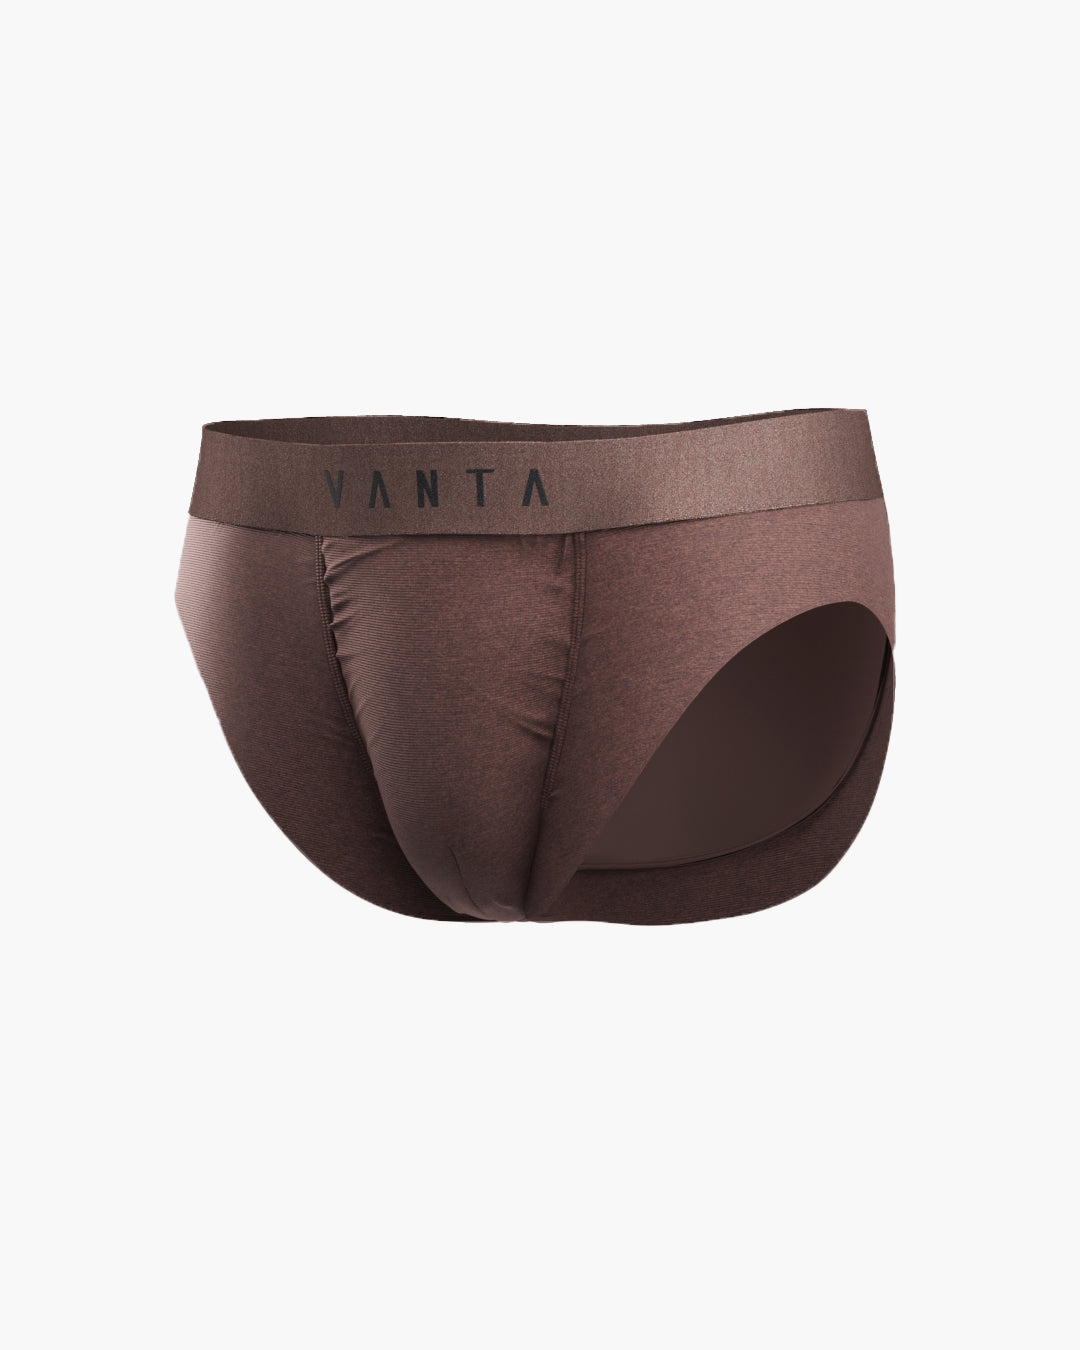 VANTA Underwear, Kanga Pouch Tech